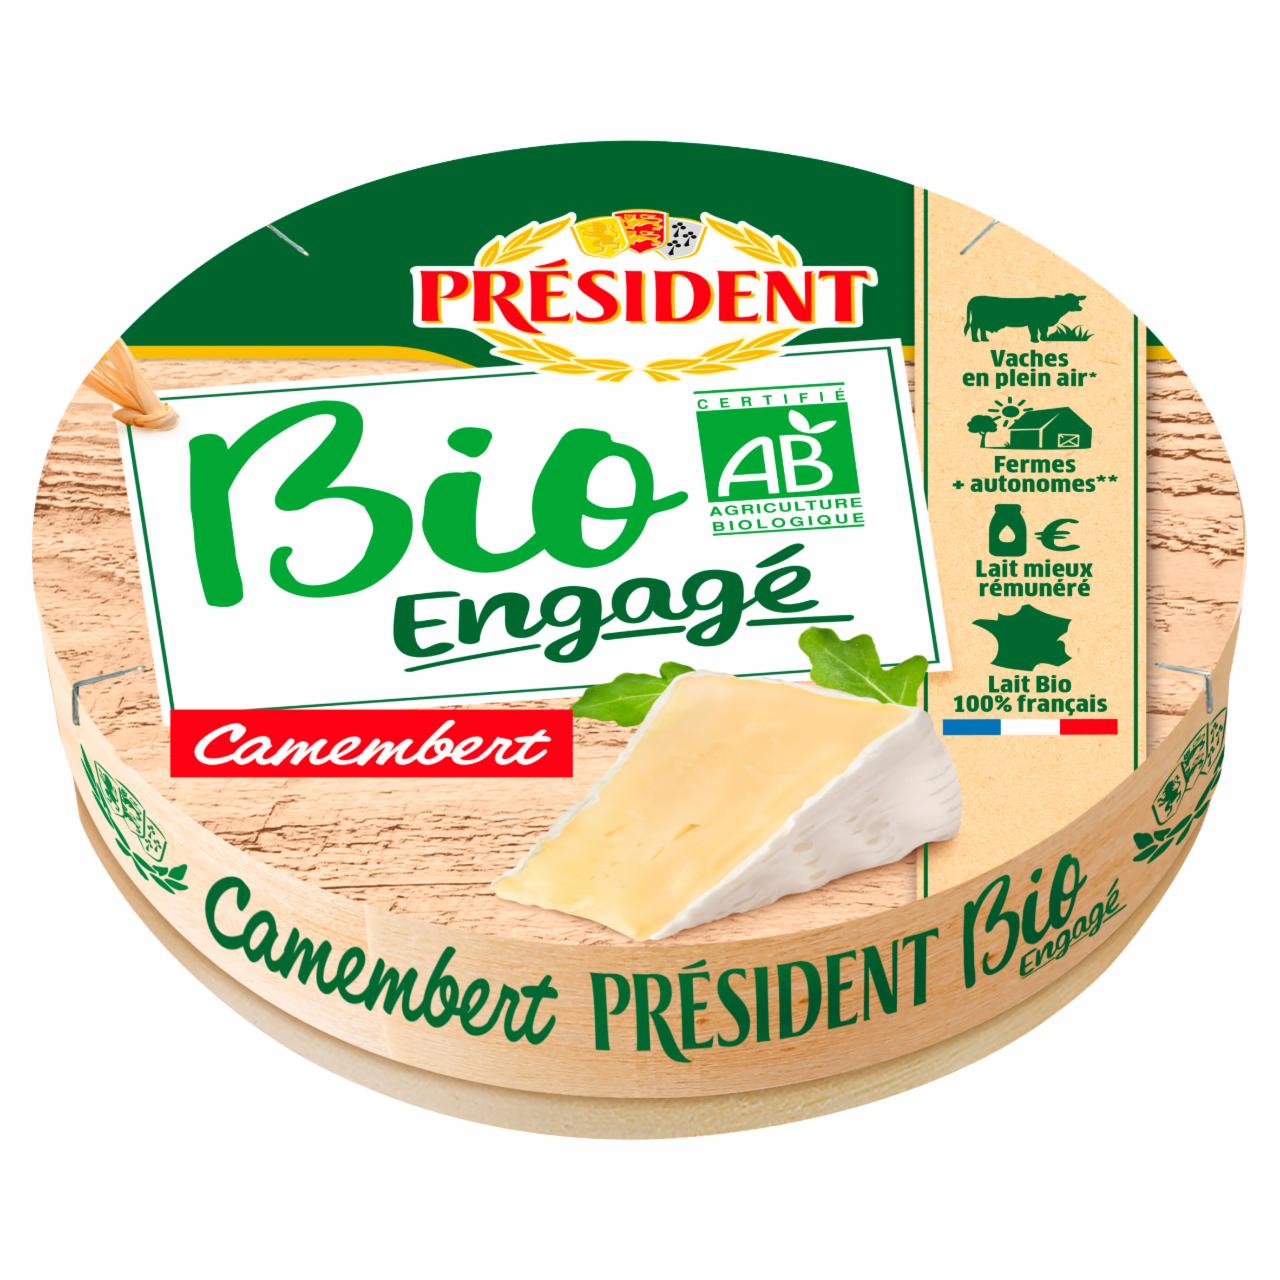 Képek - Président BIO camembert 250 g